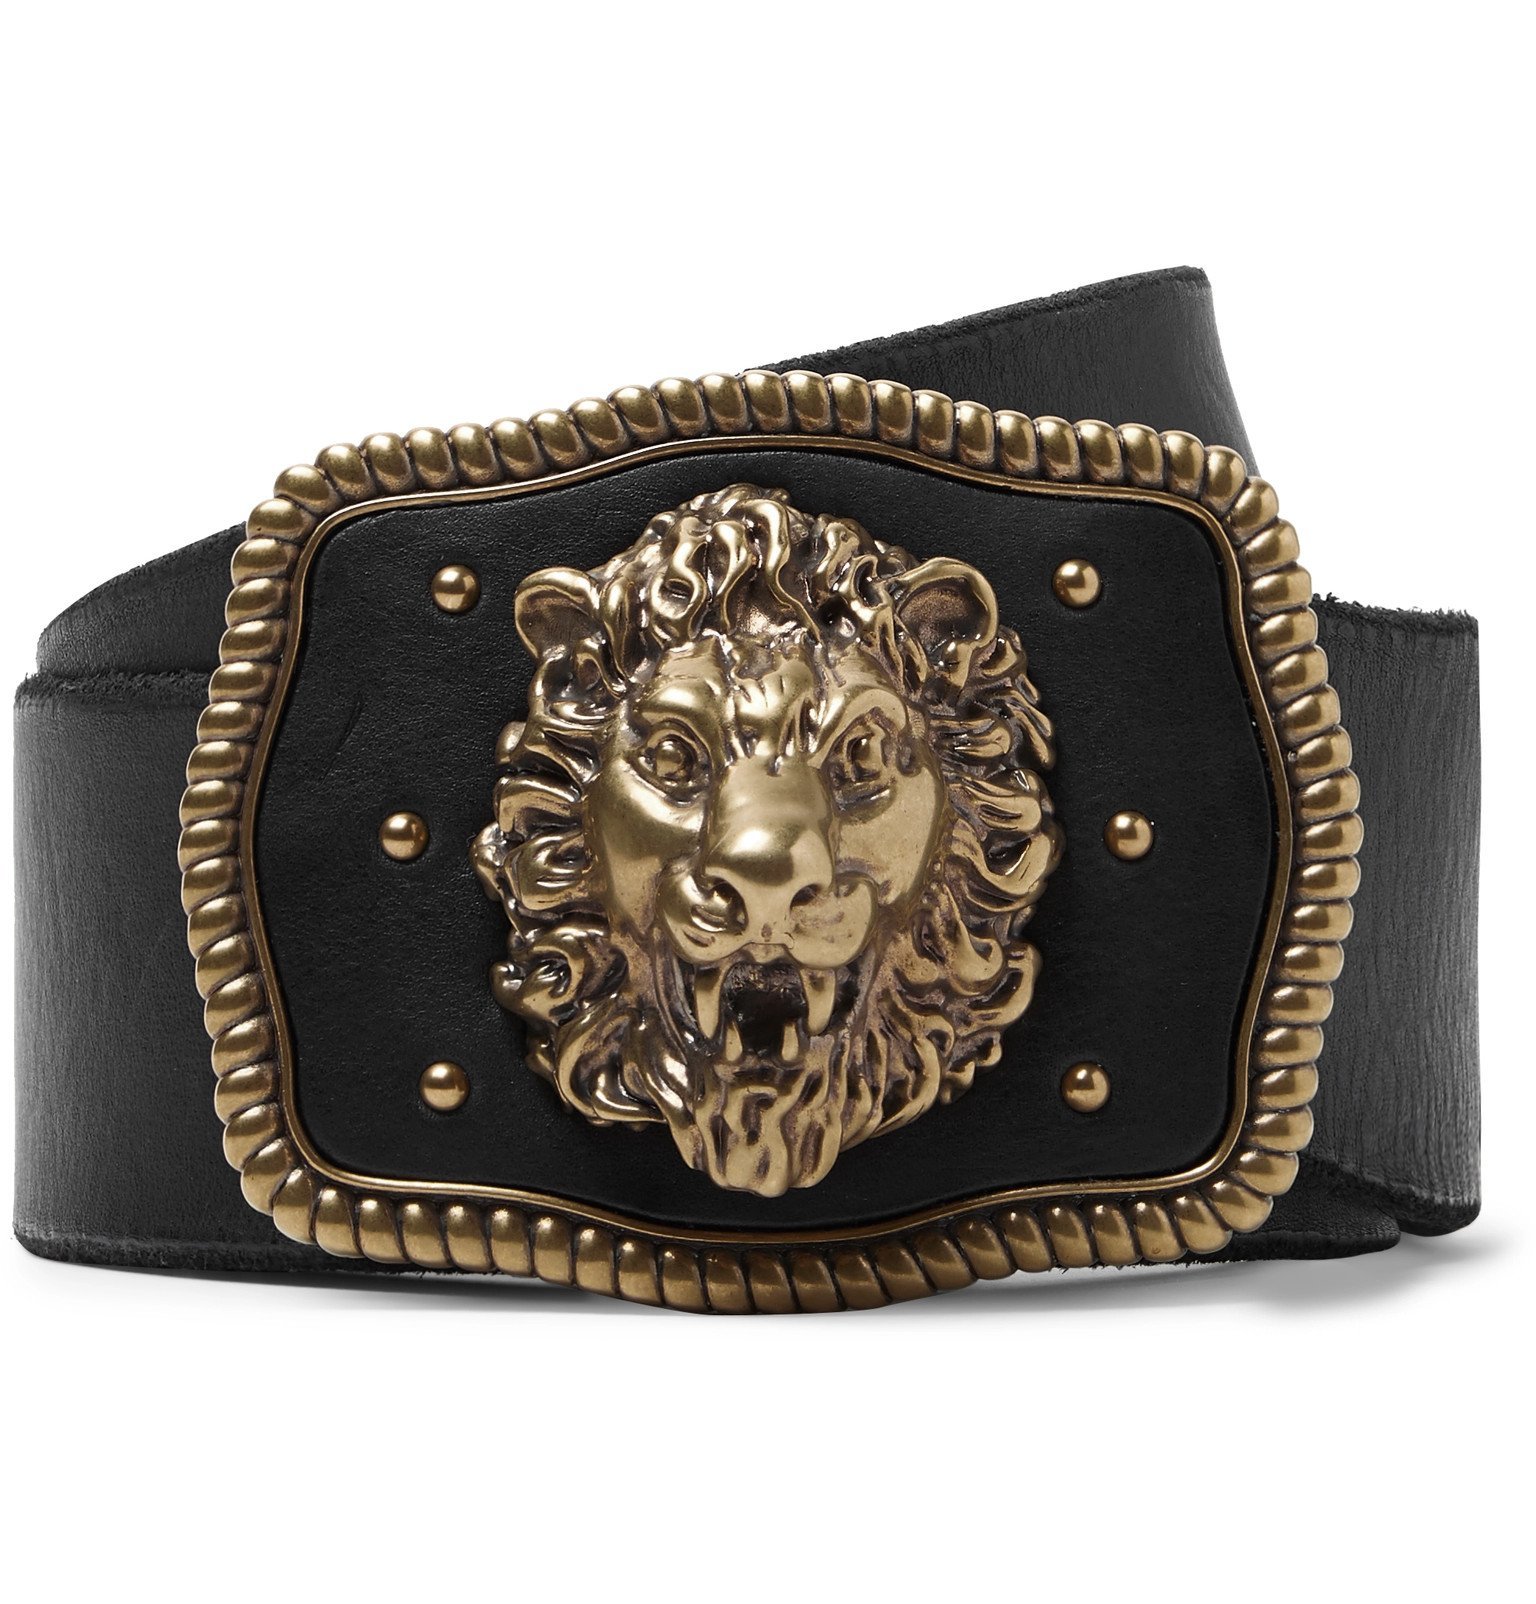 Gucci - 5cm Black Leather Belt - Black Gucci